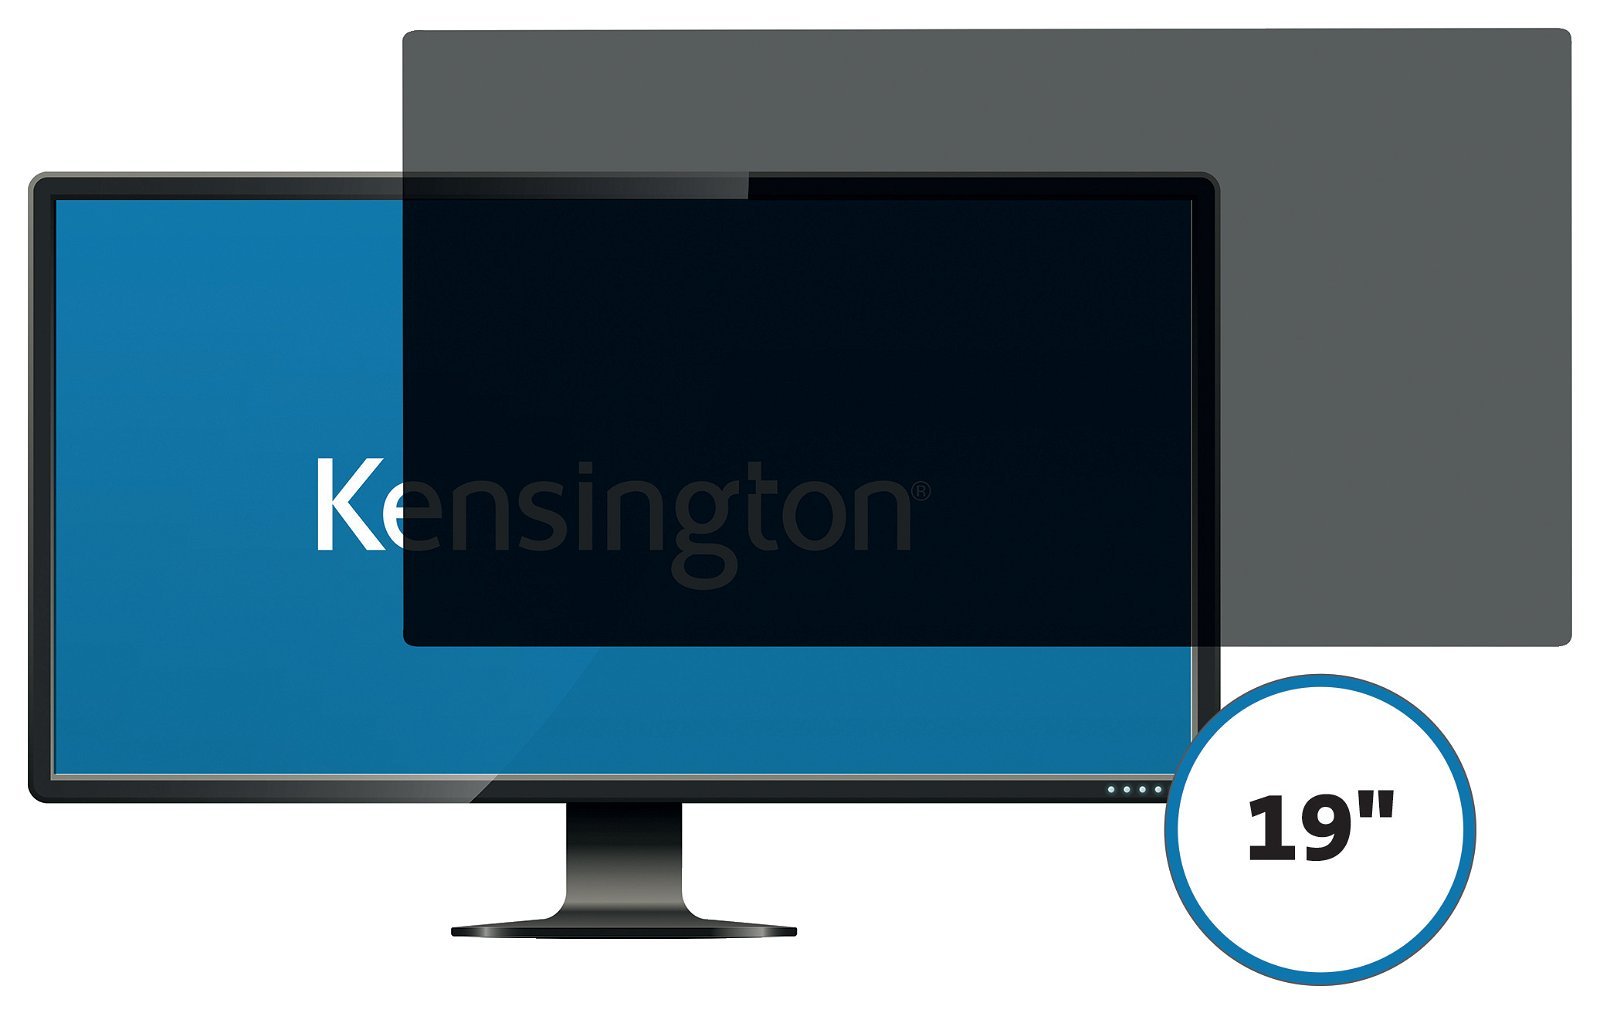 Kensington skærmfilter 19" transparent